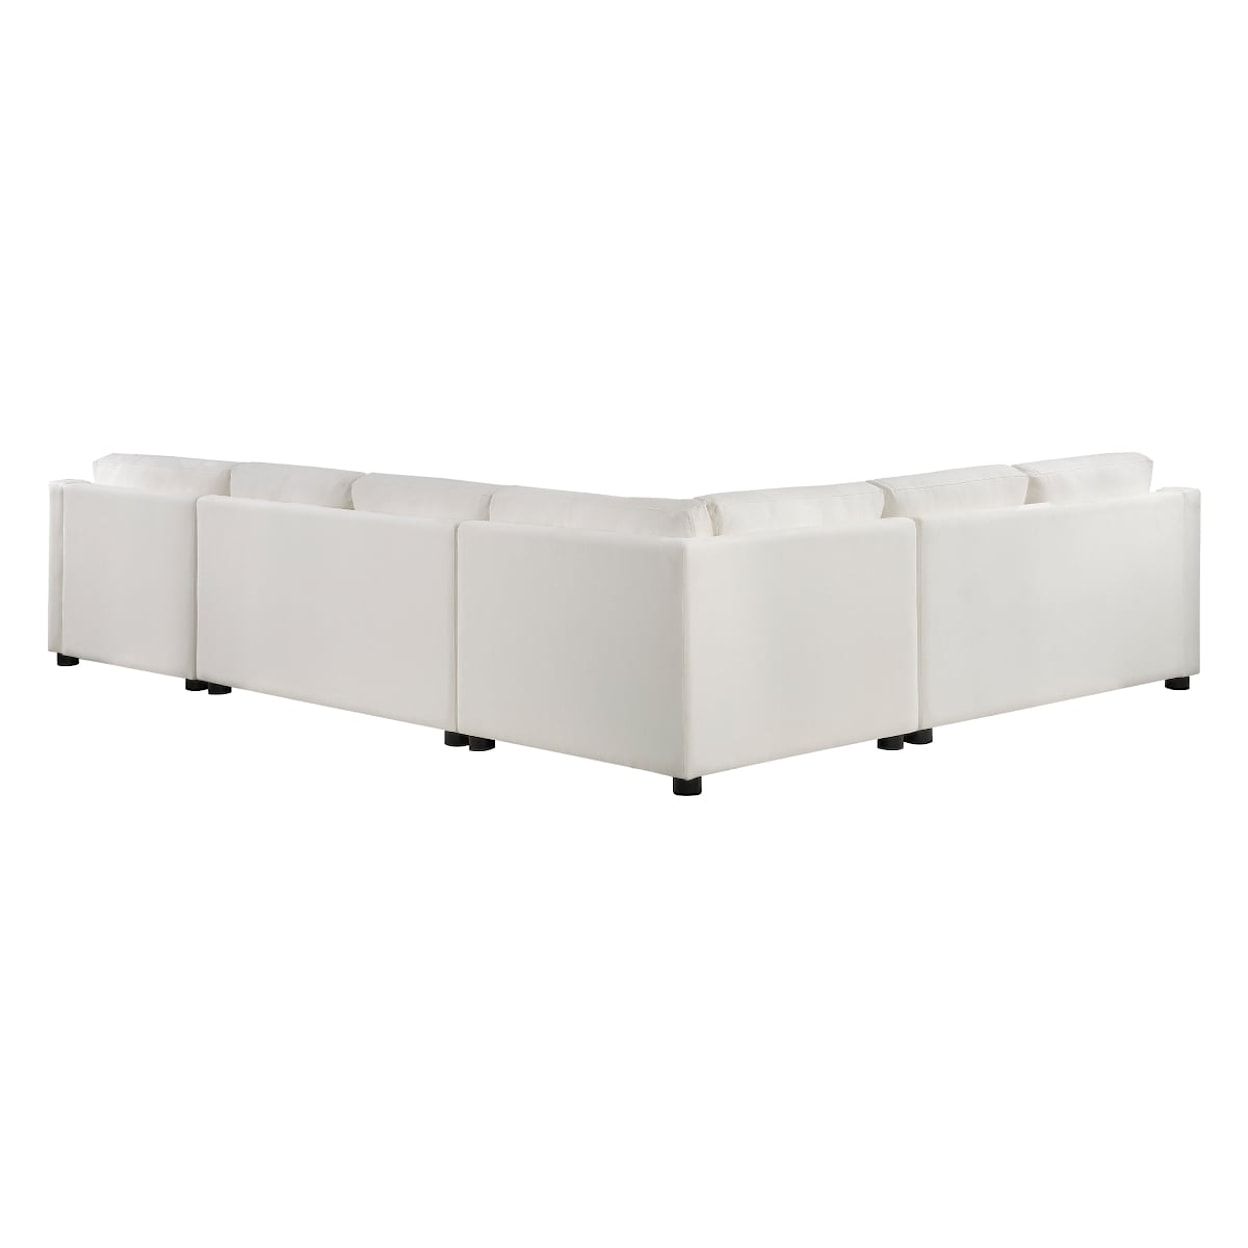 Homelegance Furniture Zayden 4-Piece Sectional Sofa